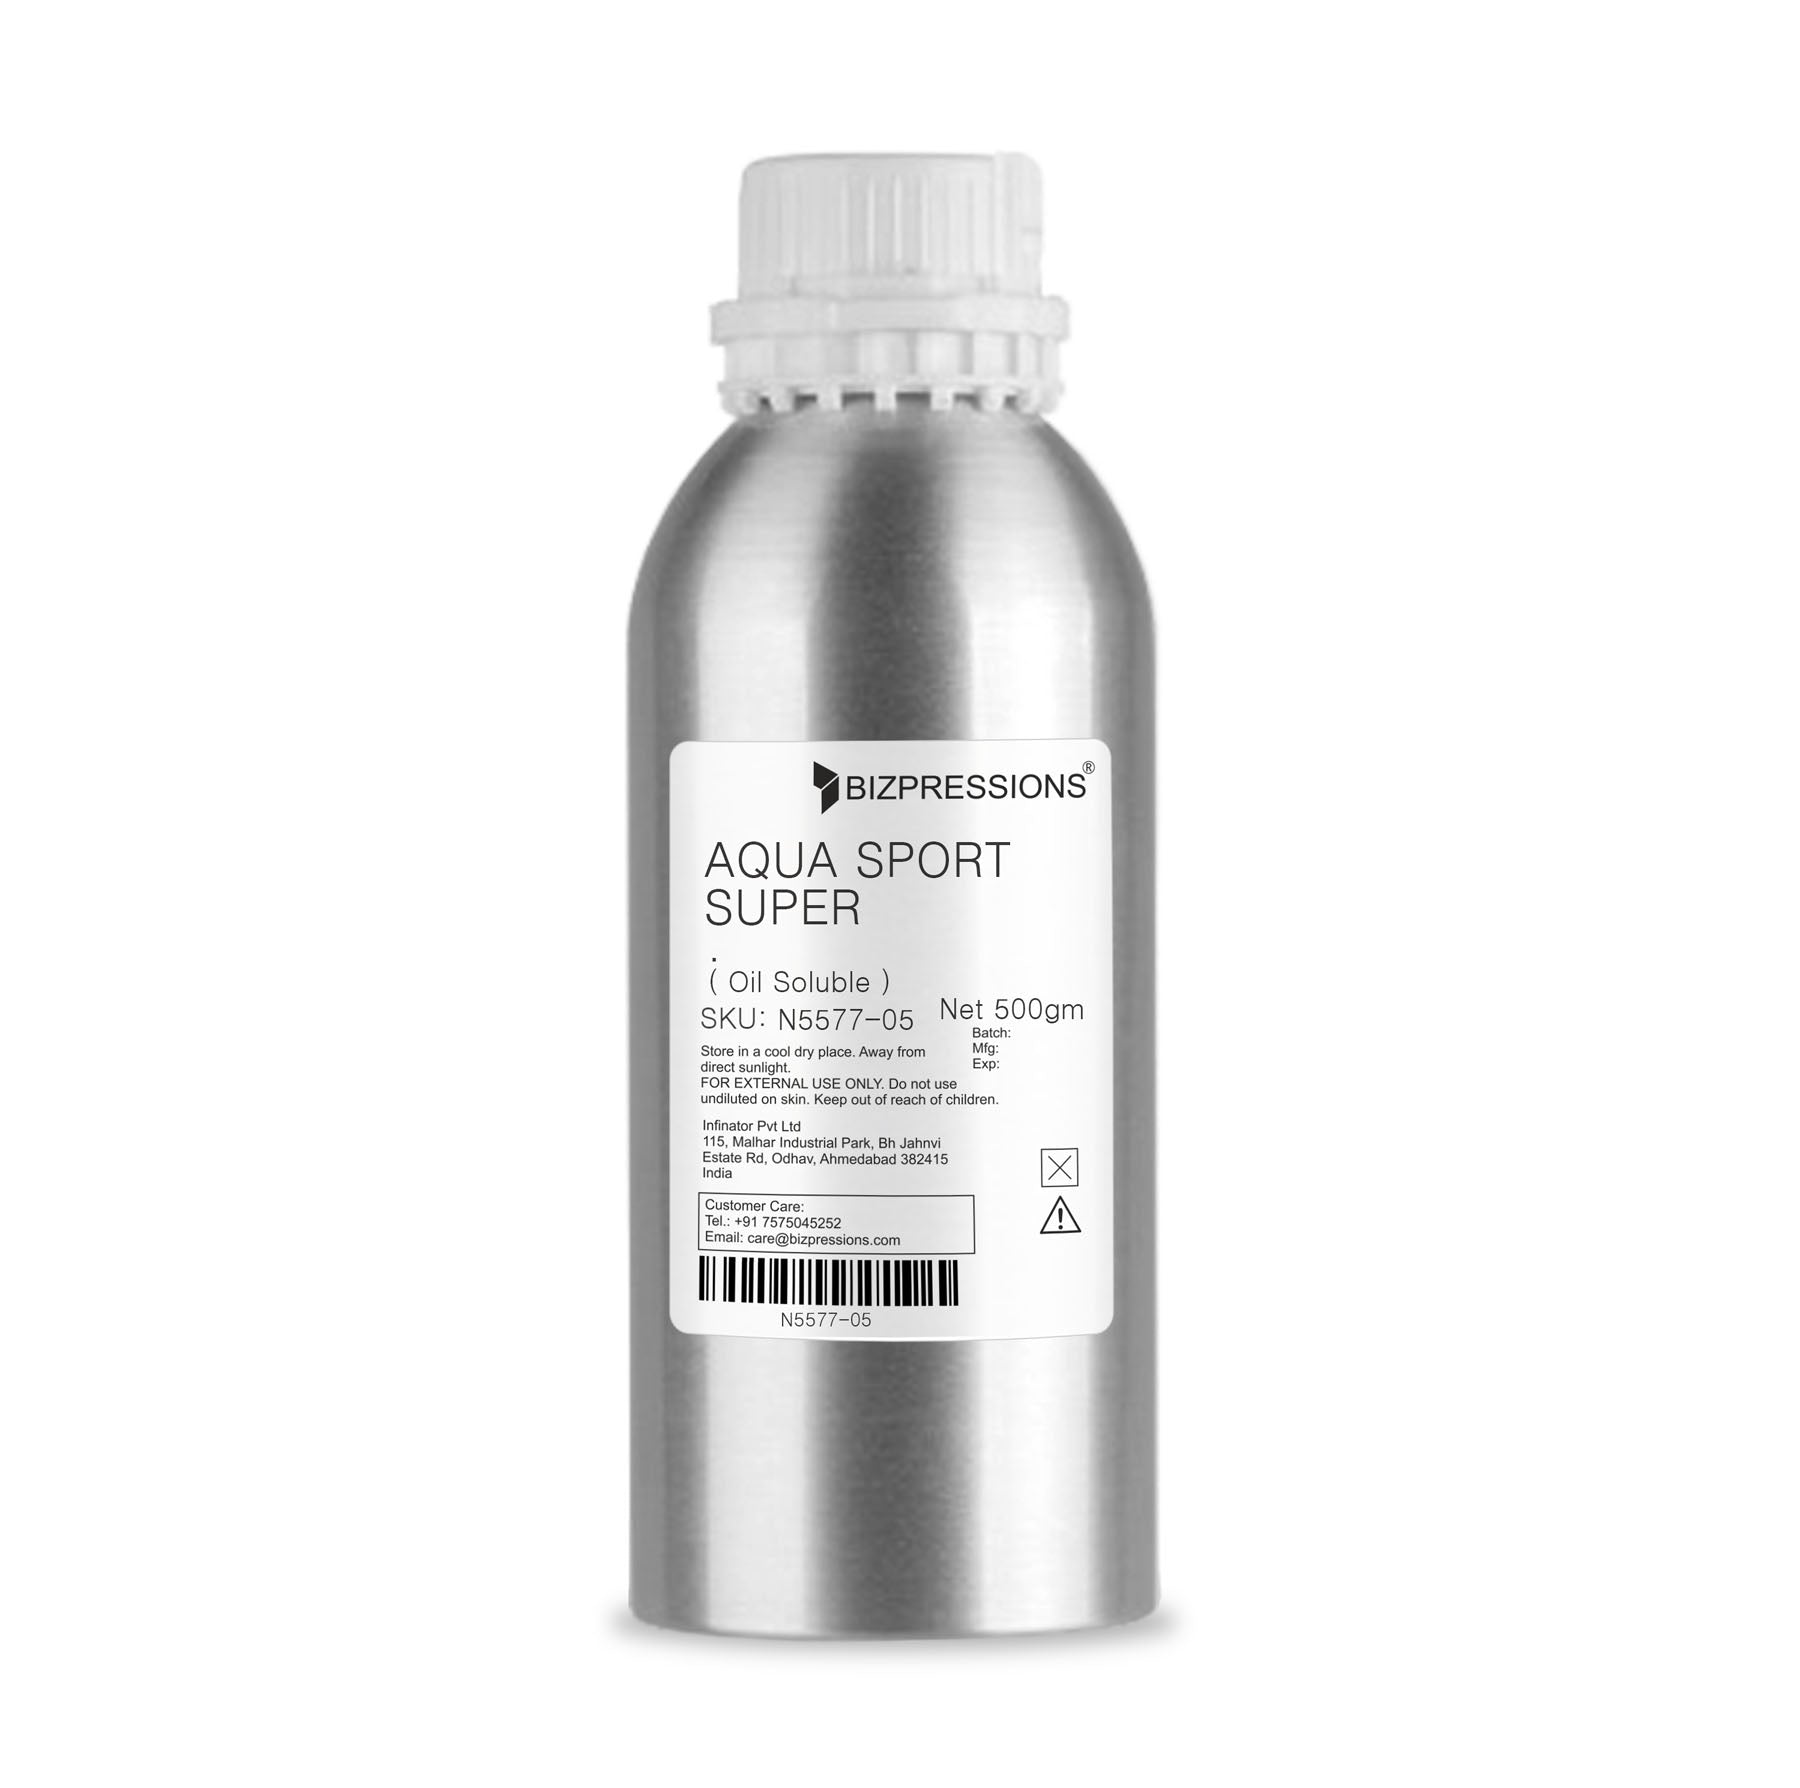 AQUA SPORT SUPER - Fragrance ( Oil Soluble ) - 500 gm